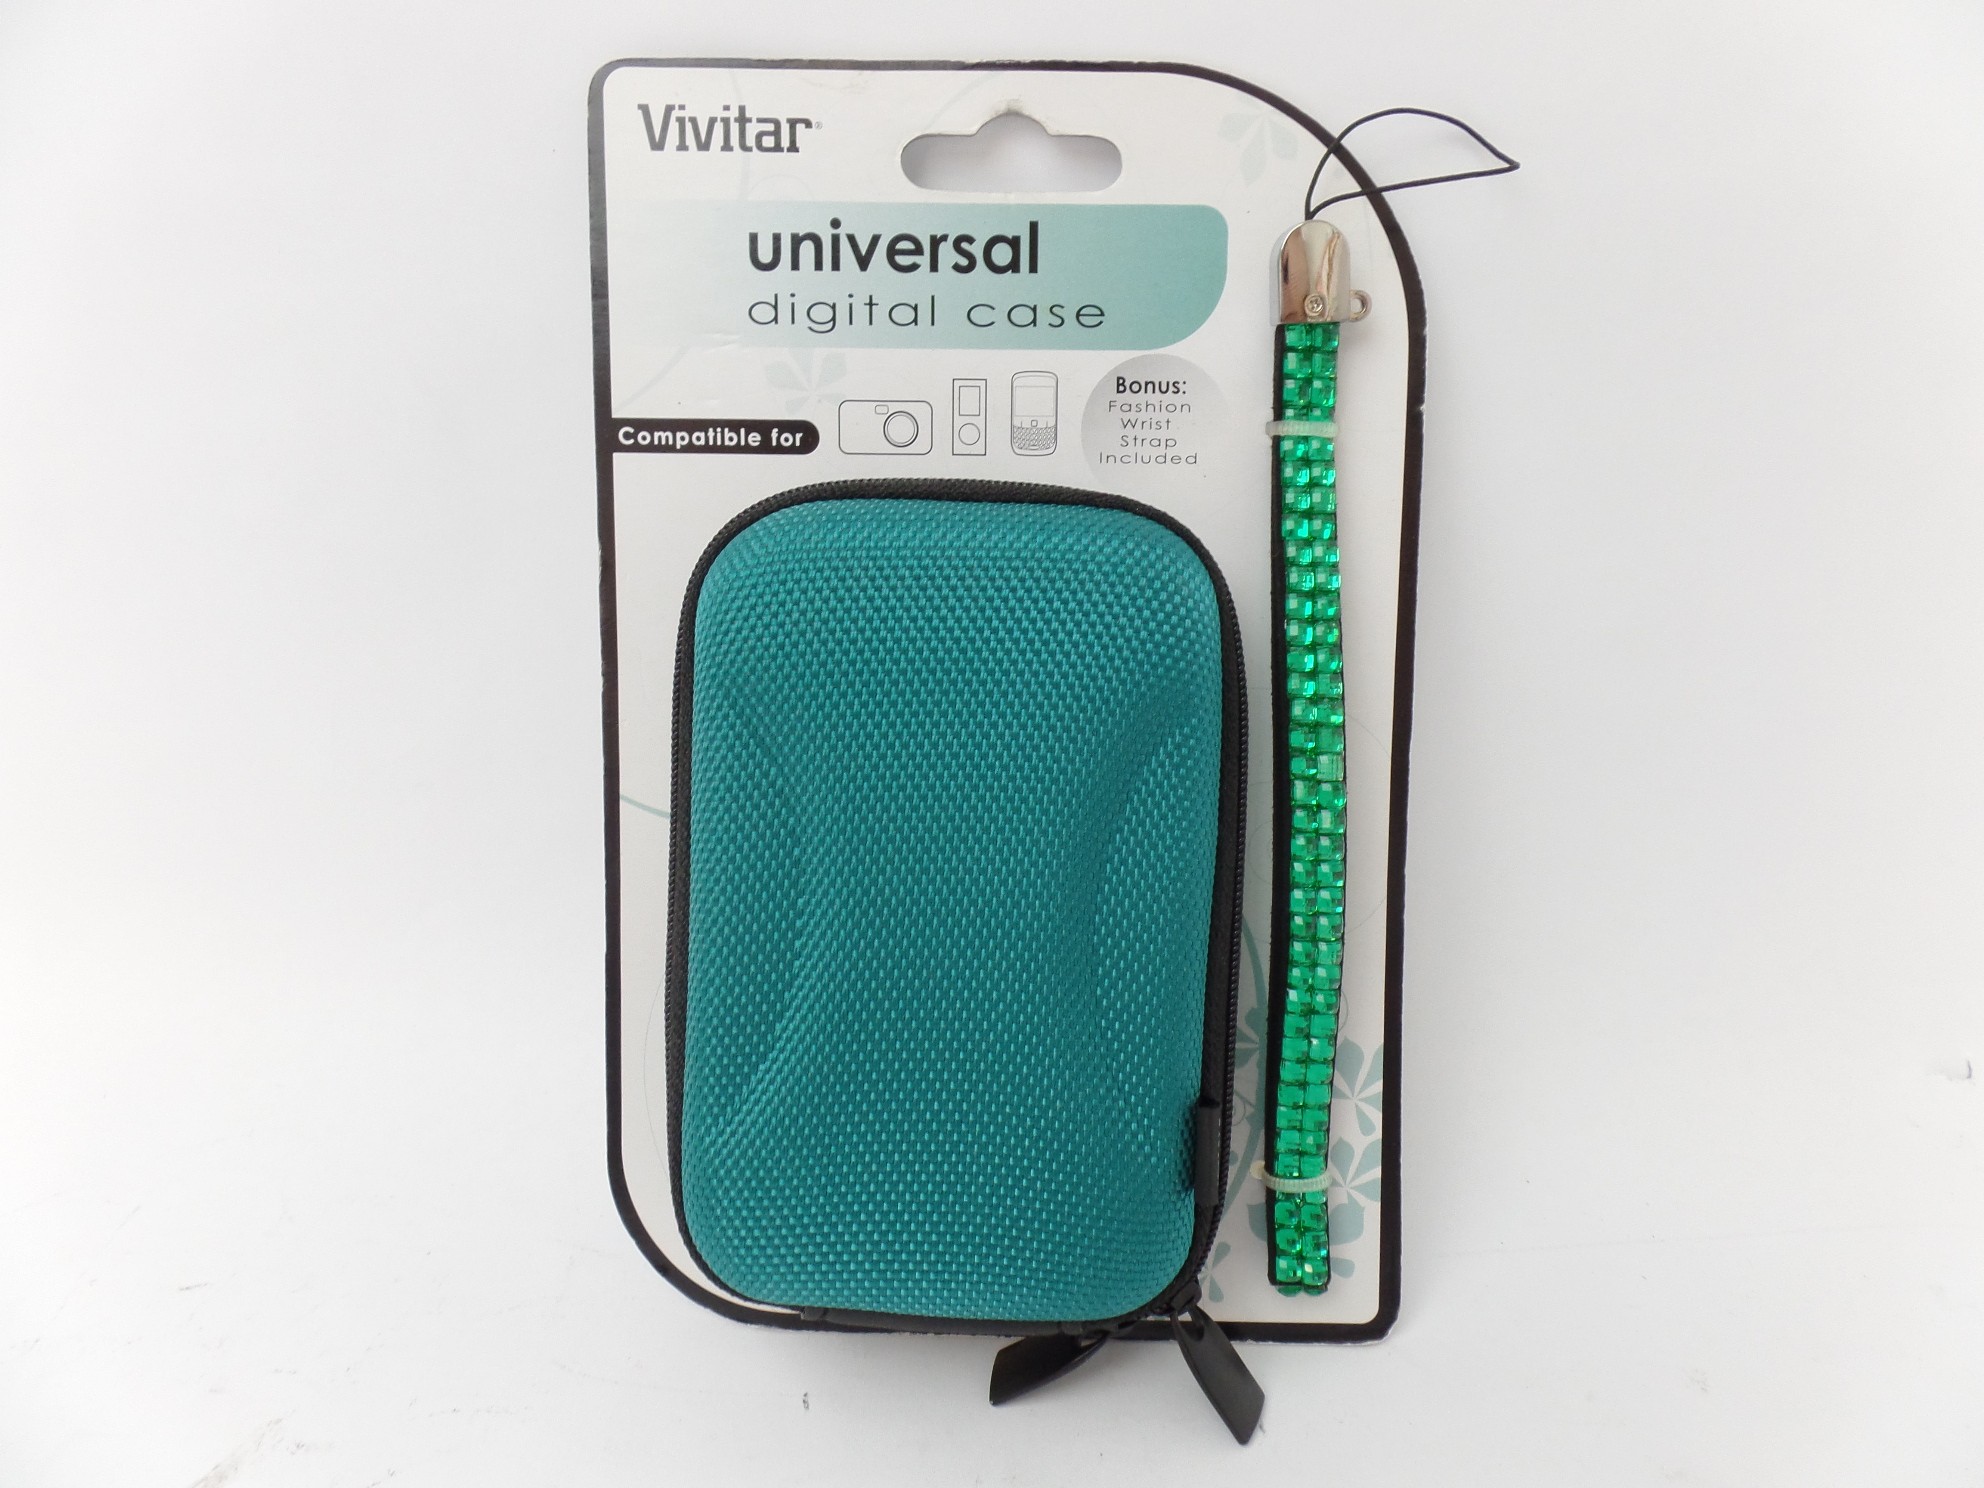 Vivitar Universal Hard Case for Digital Camera MP3 MP4 Player iPod w Wrist Strap